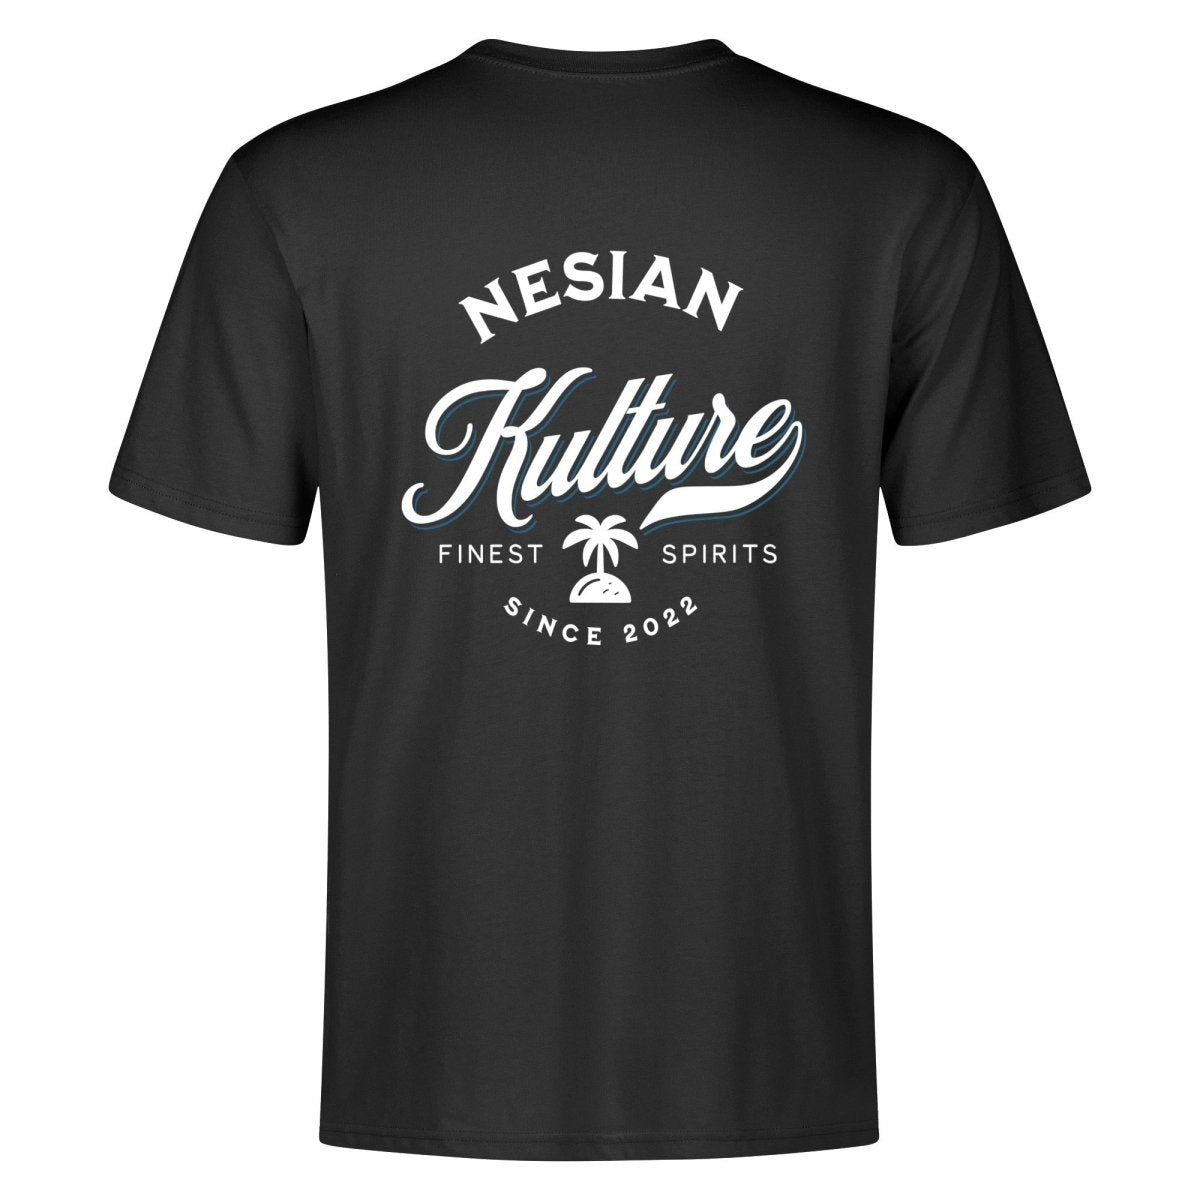 Nesian Kulture Finest Spirits T-shirt - Nesian Kulture